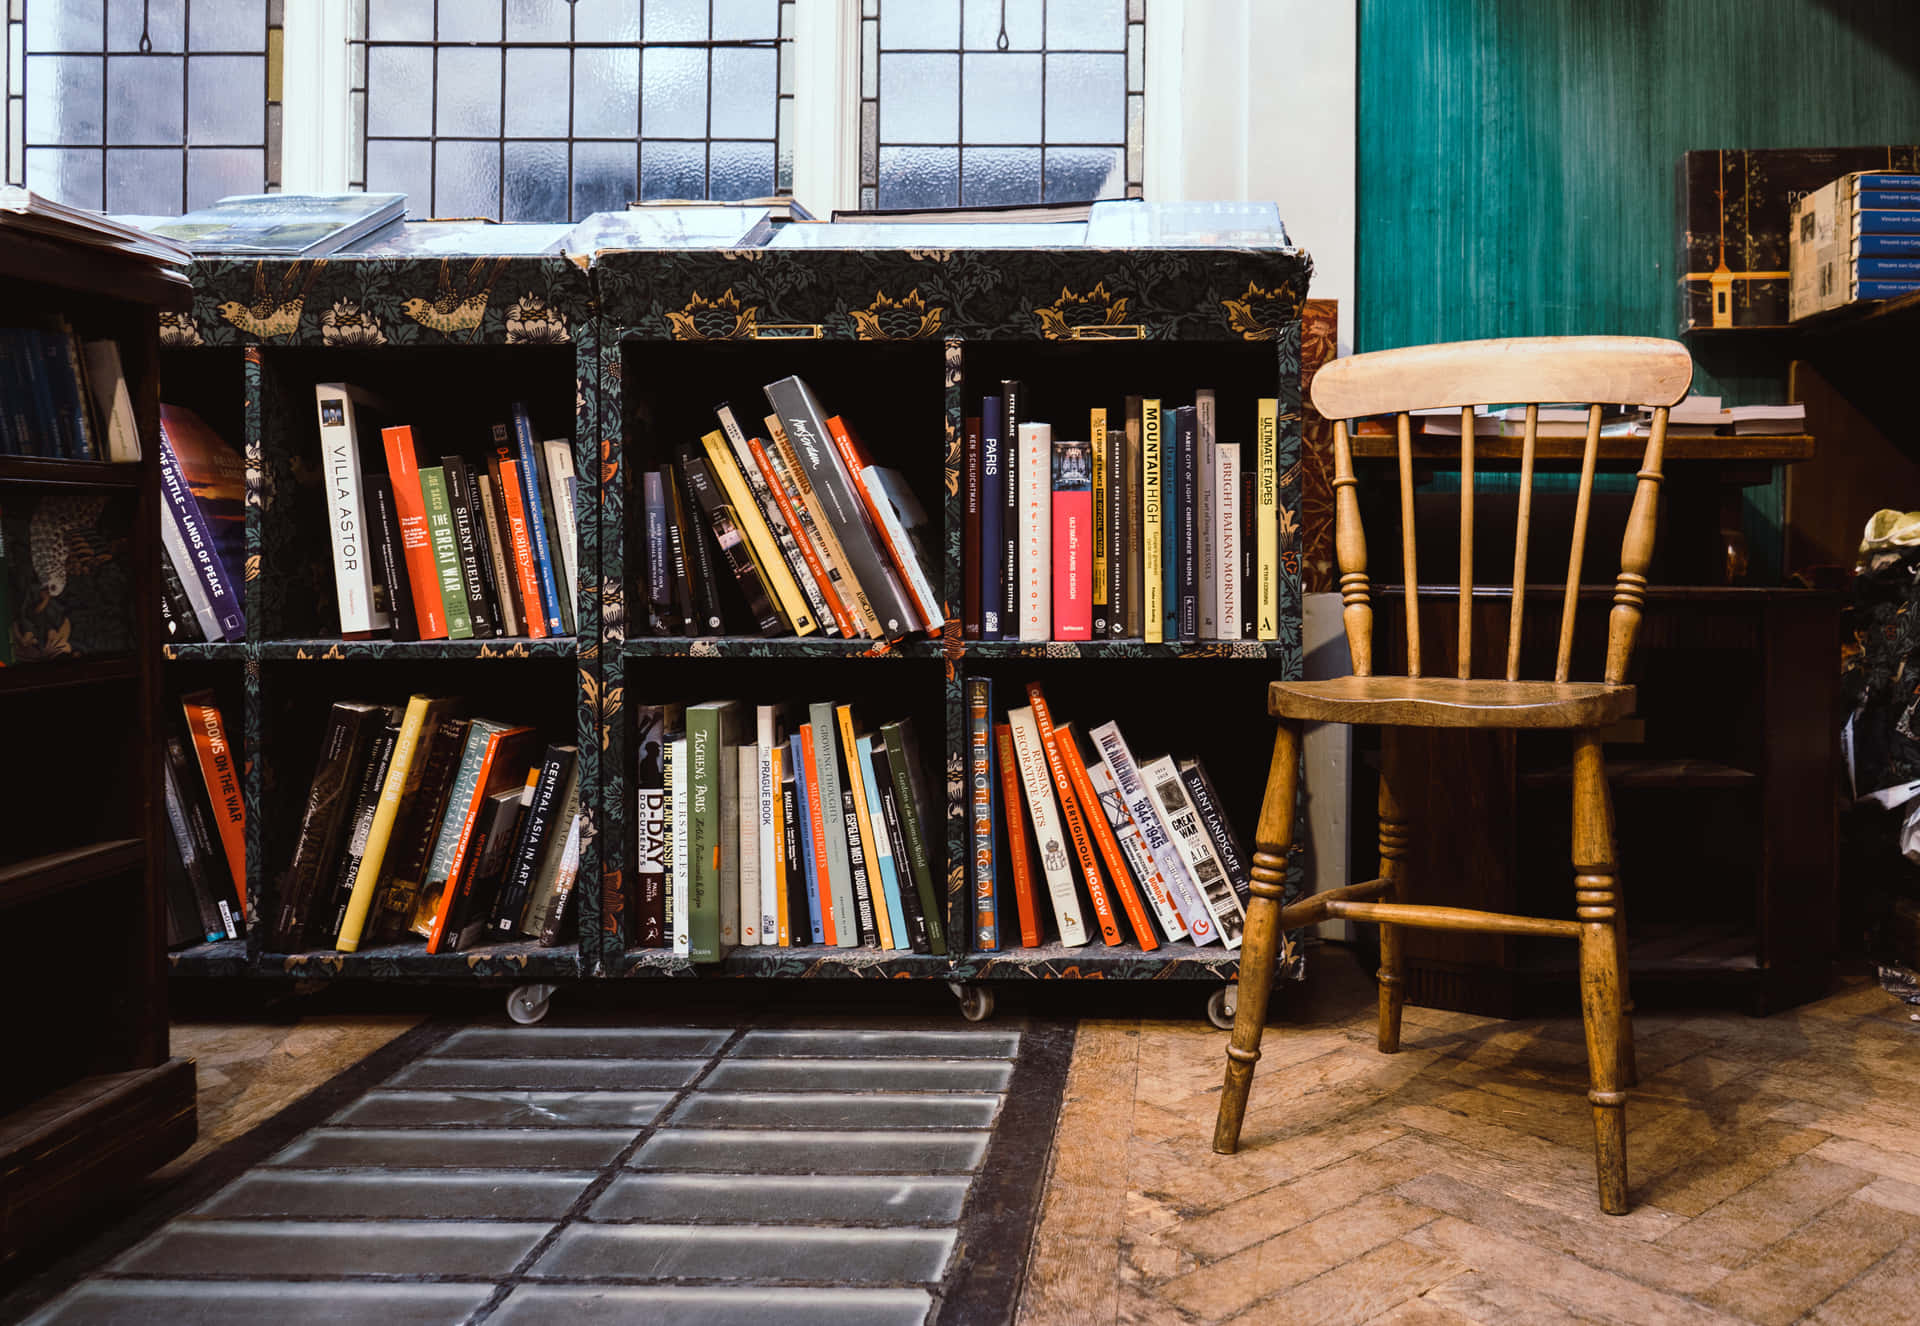 A Creative Workspace with a Cozy Bookshelf